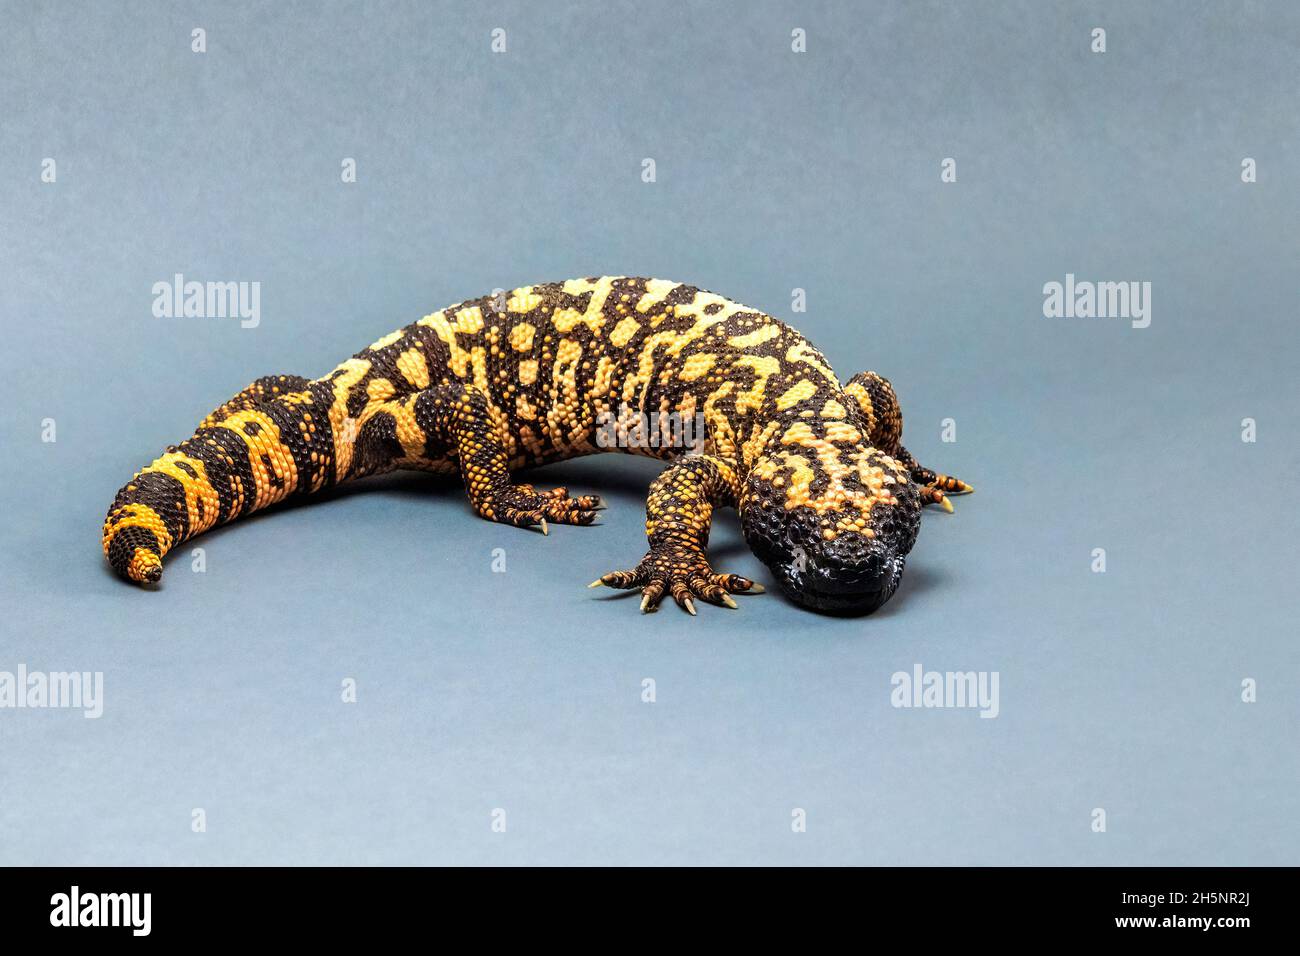 Gila Monster Lizard Isolated on Grey Background Stock Photo